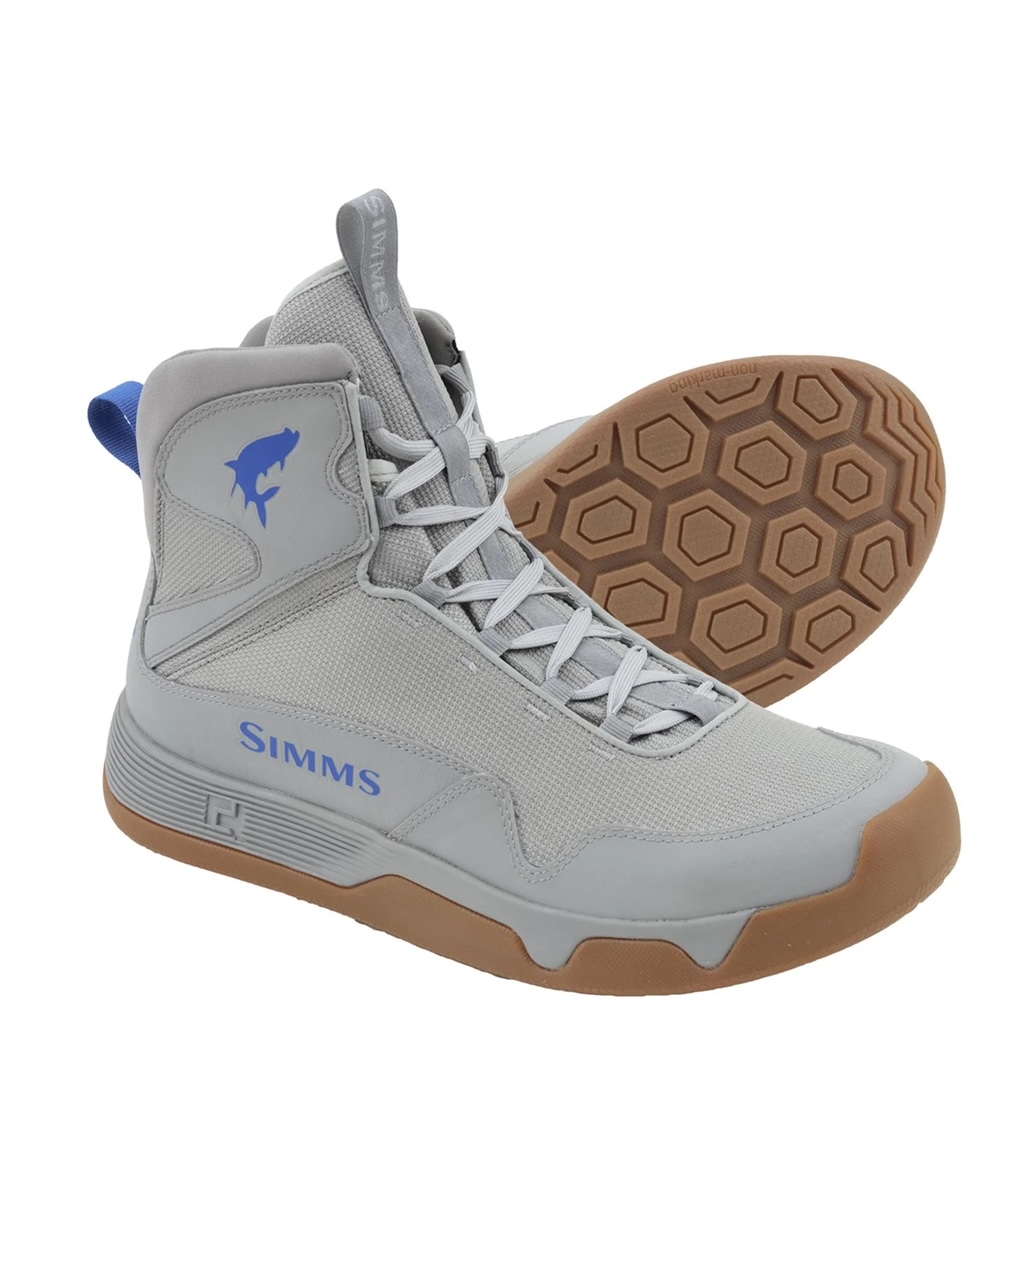 Simms Flats Sneaker Size 9